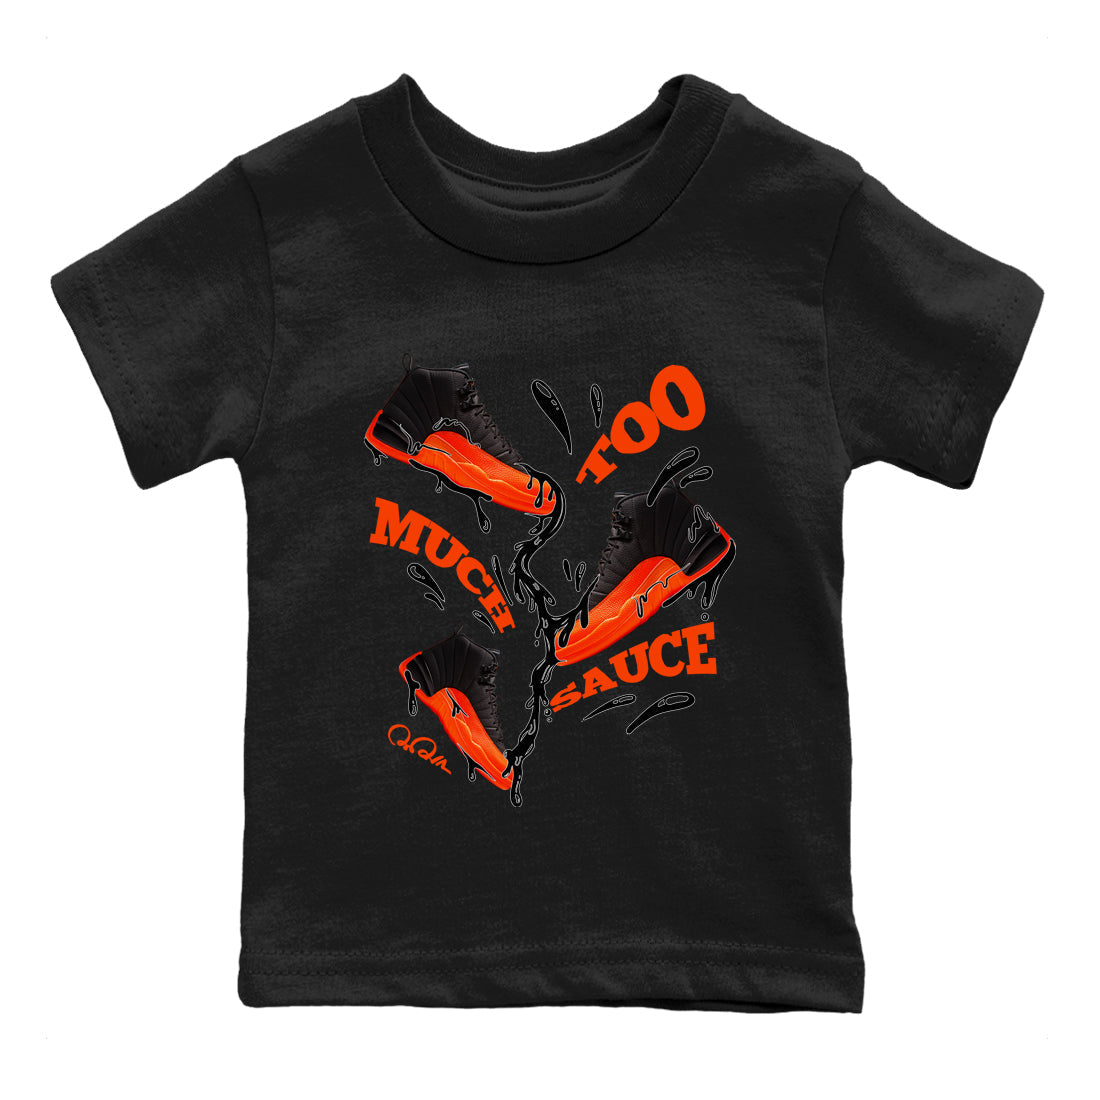 Air Jordan 12 Brilliant Orange Sneaker Match Tees Too Much Sauce Sneaker Tees AJ12 Brilliant Orange Sneaker Release Tees Kids Shirts Black 2